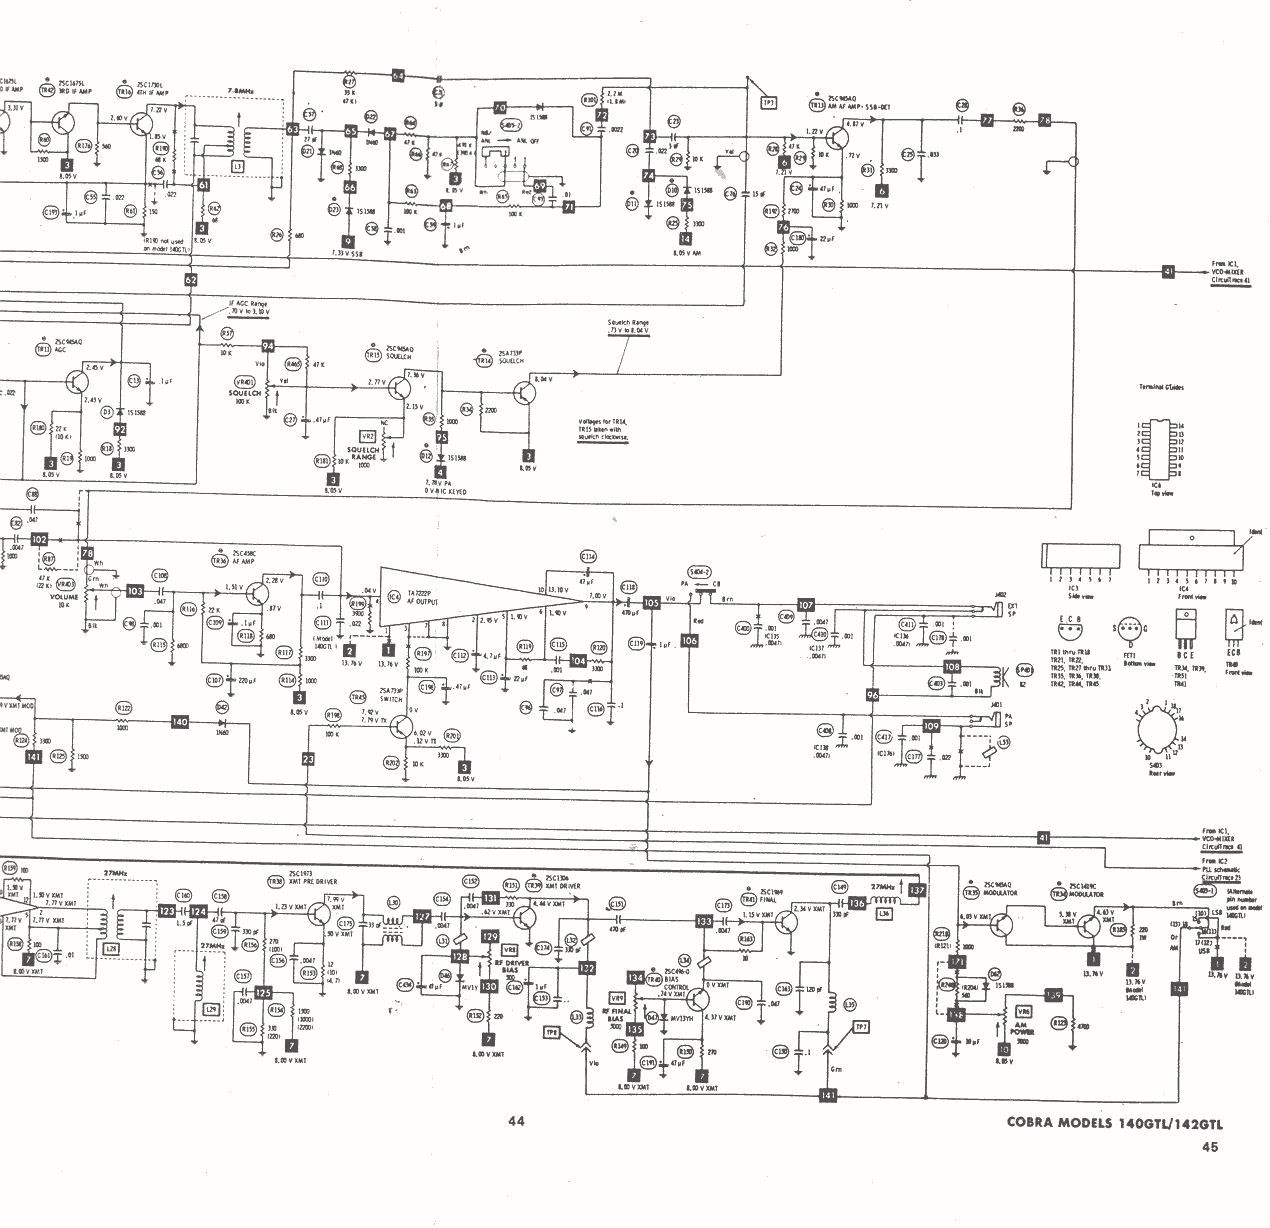 Cobra 140GTL Schematic diagram for Cobra 140GTL.

Part 3 of 4